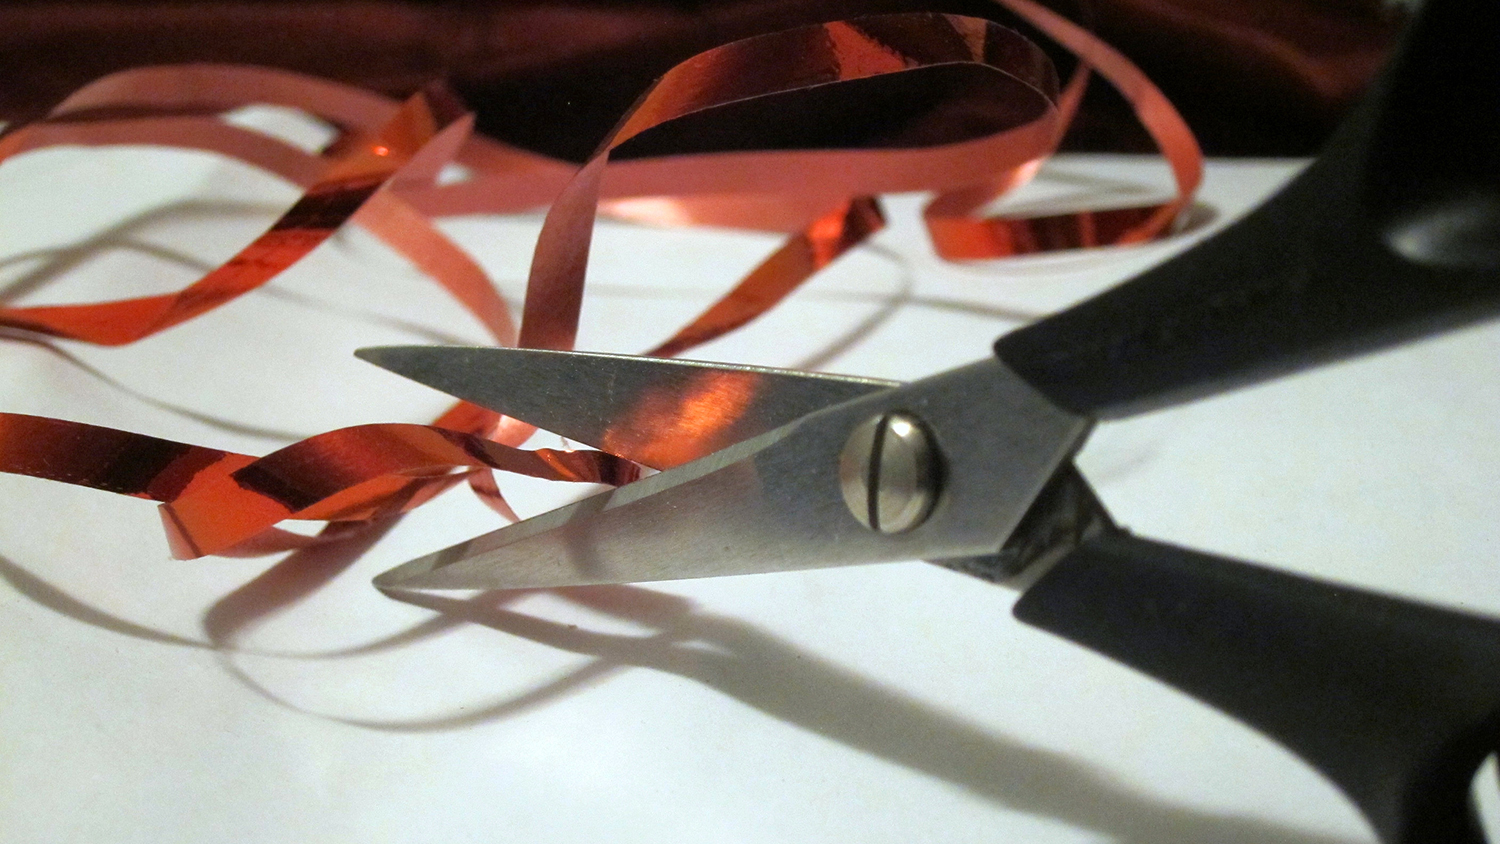 Scissors prepare to cut through a tangle of yarn